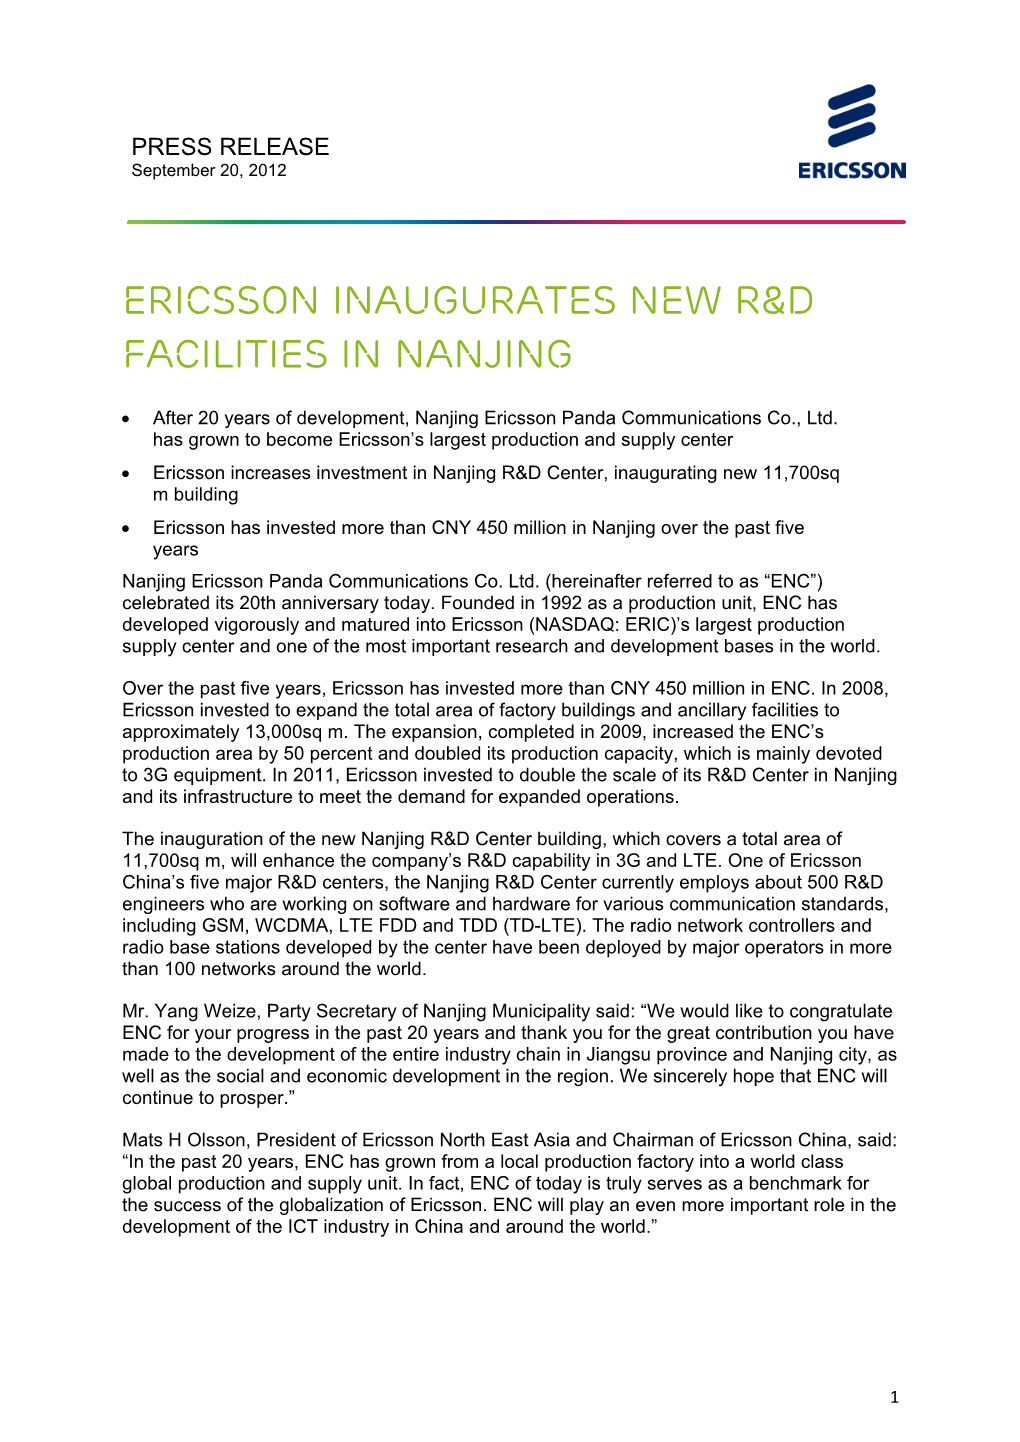 Ericsson Inaugurates New R&D Facilities in Nanjing